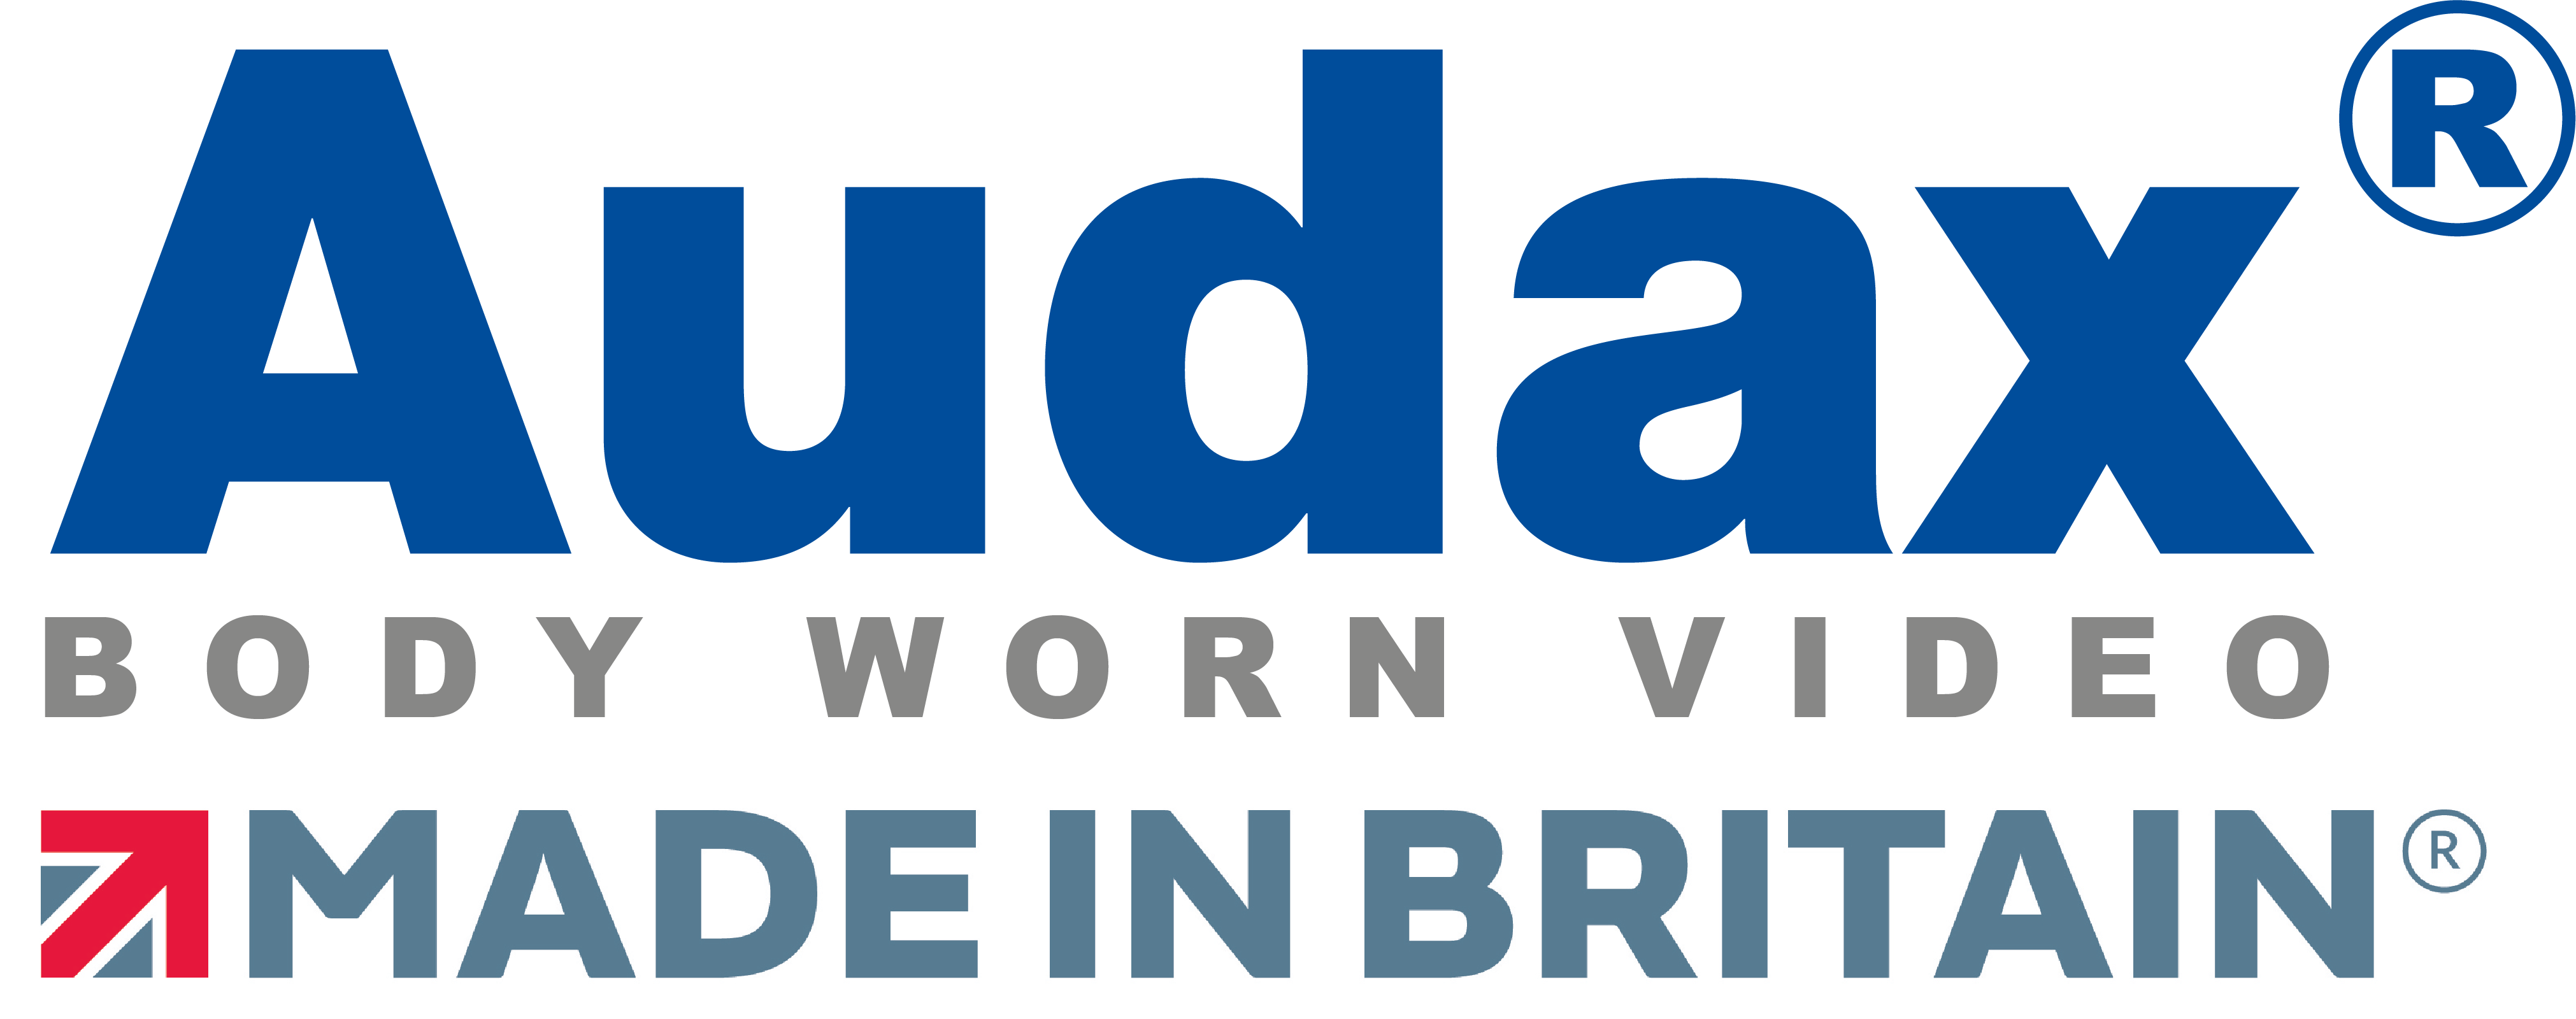 Company logo image - Audax